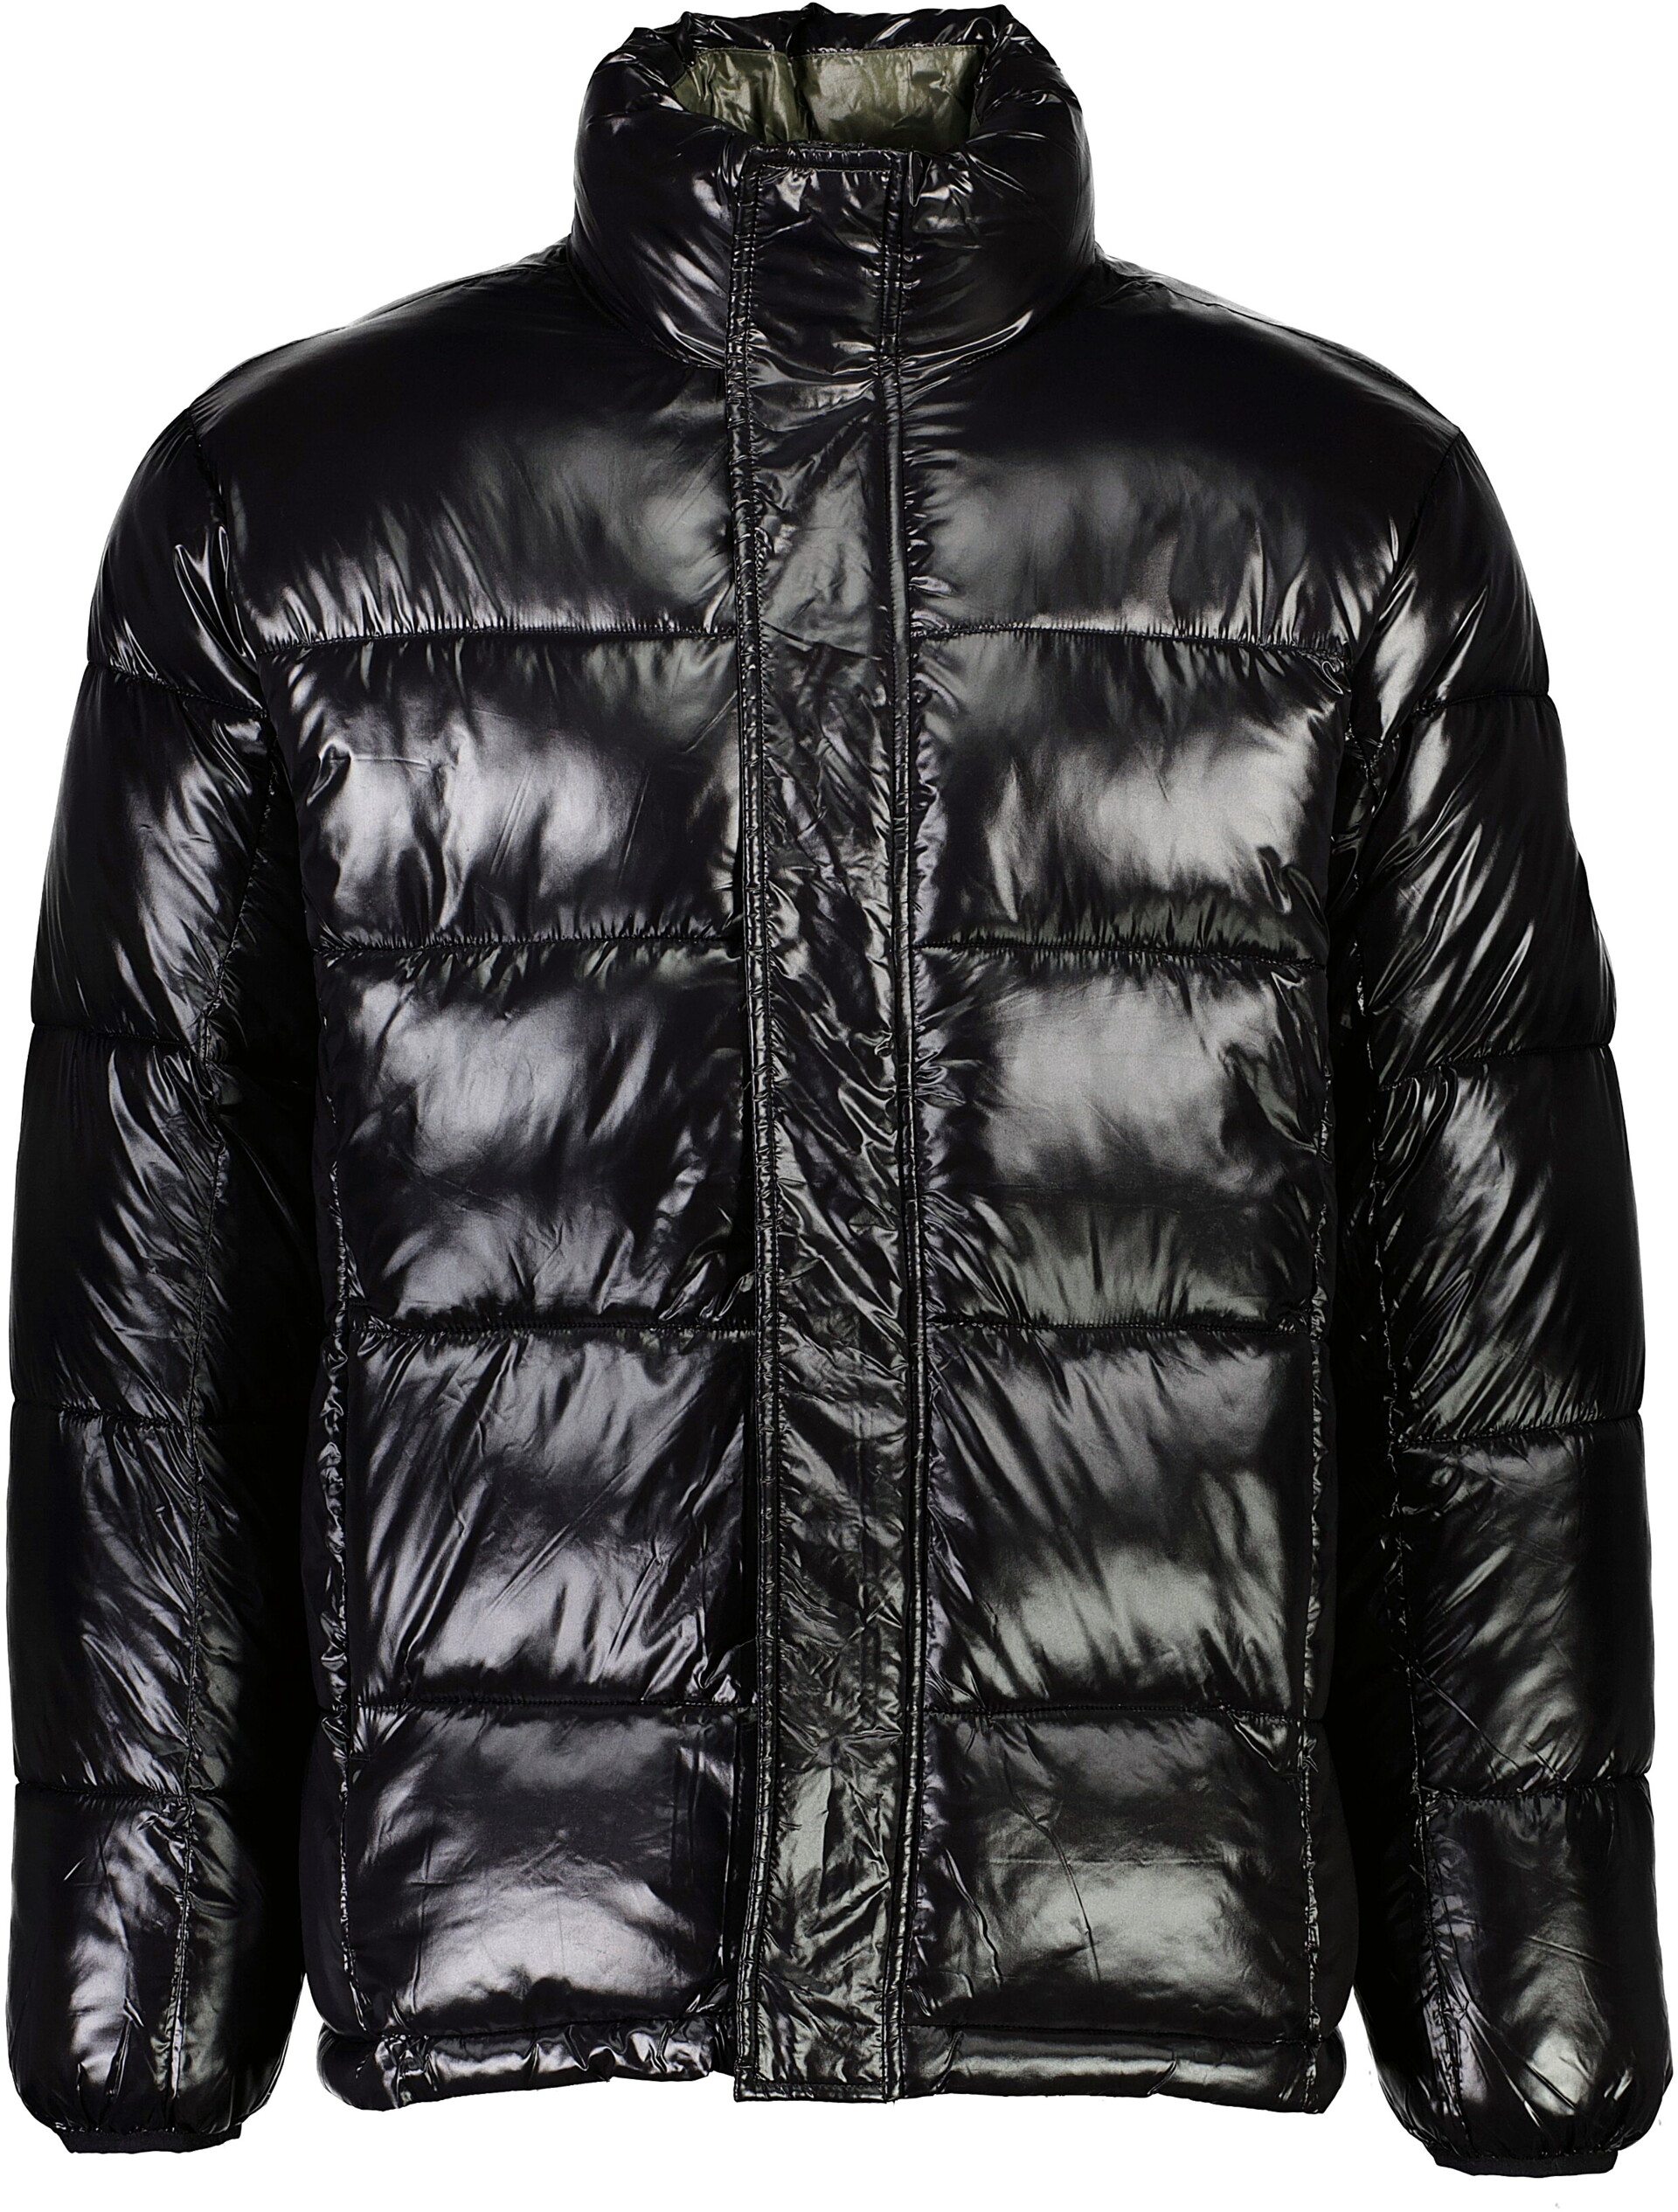 Lindbergh Padded jacket black / black